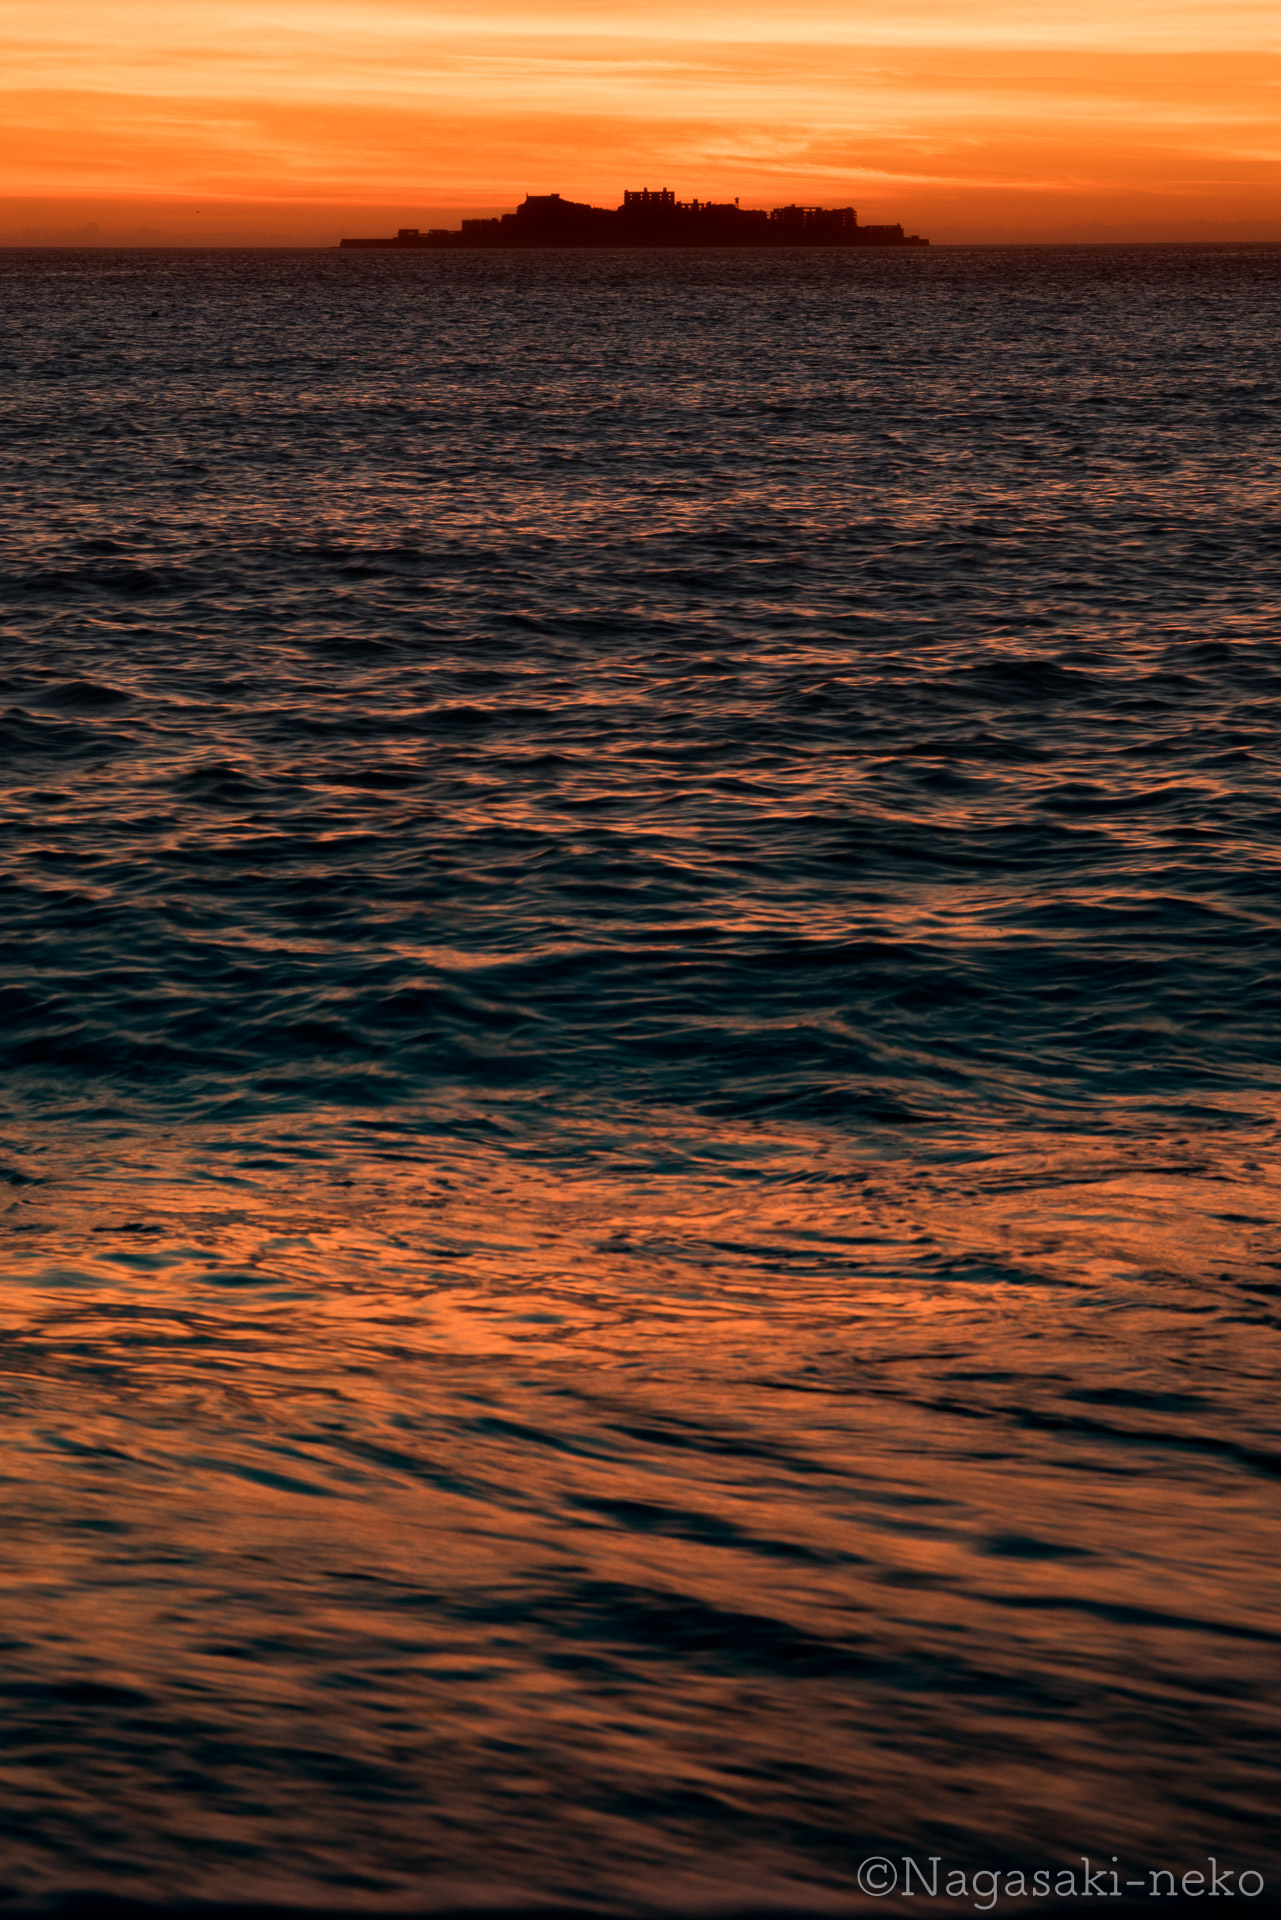 The sunset on Warship Island